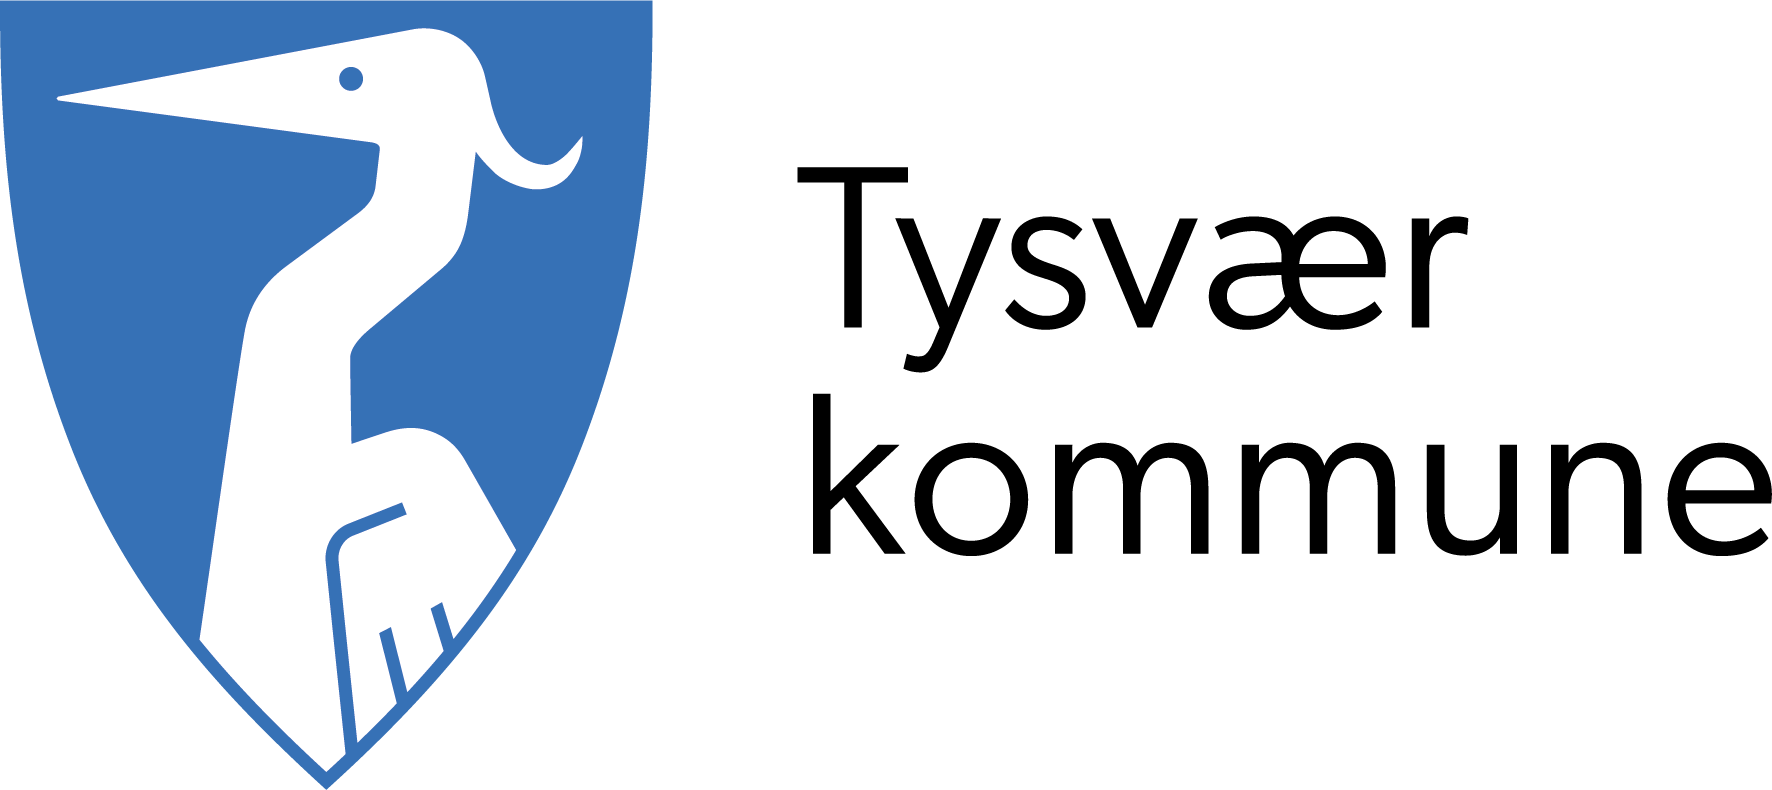 Tysv├ªr kommune logo.png